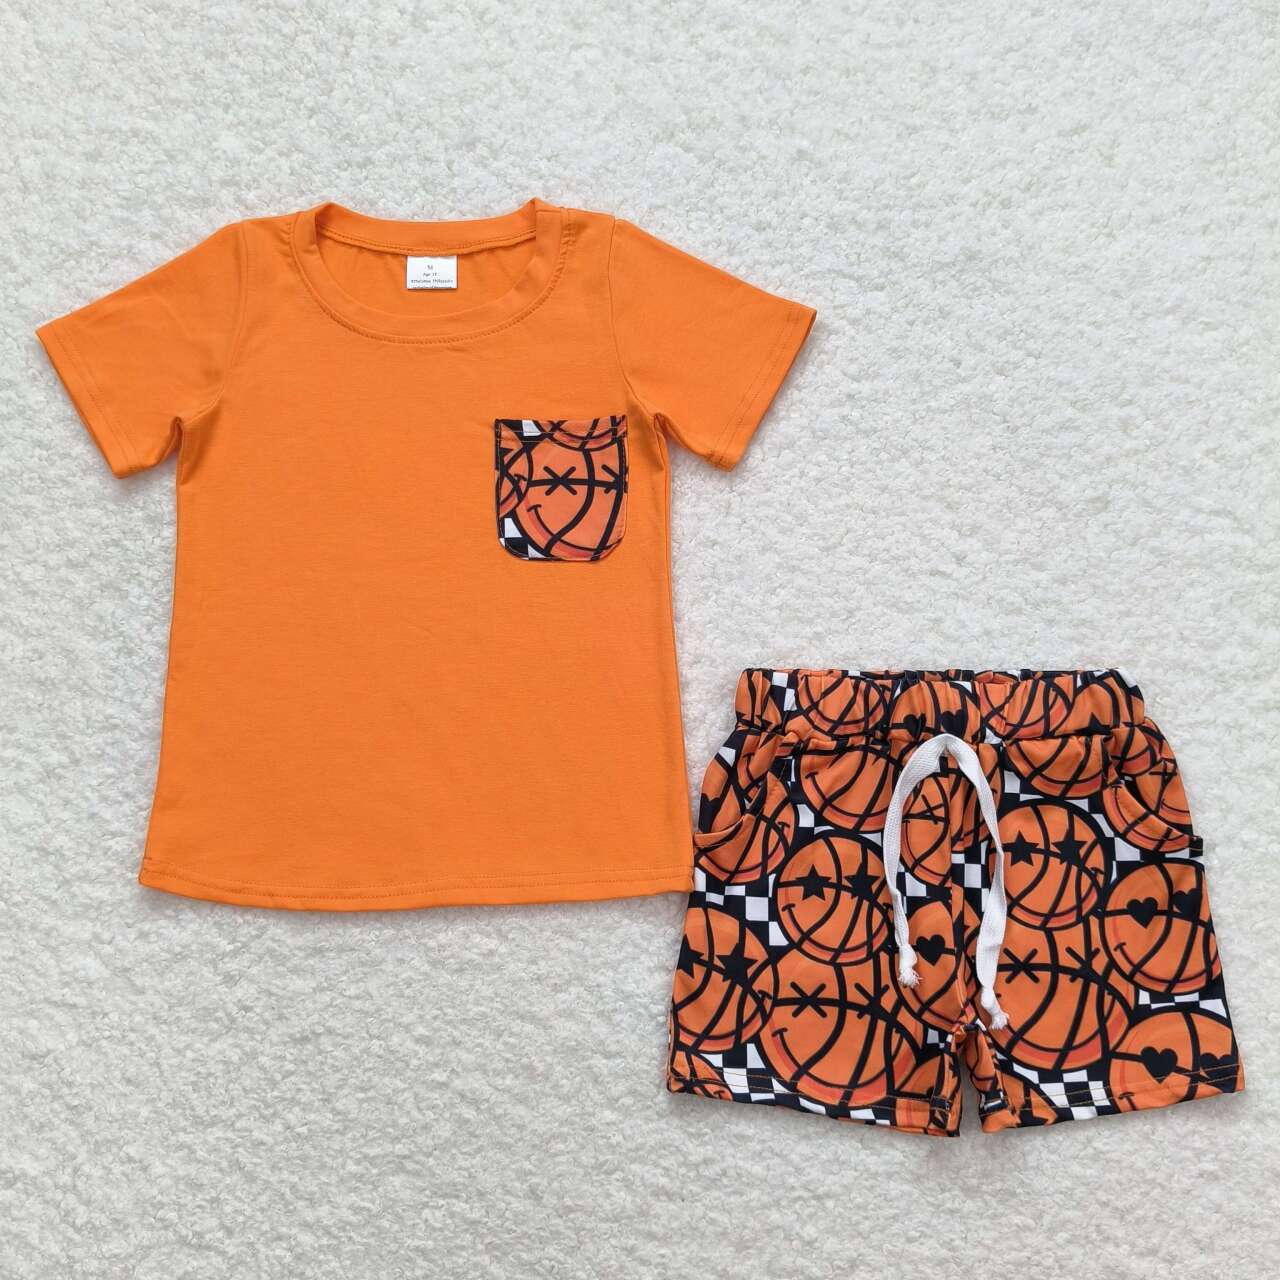 BSSO0789 Orange Pocket Top Basketball Shorts Boys Summer Clothes Set